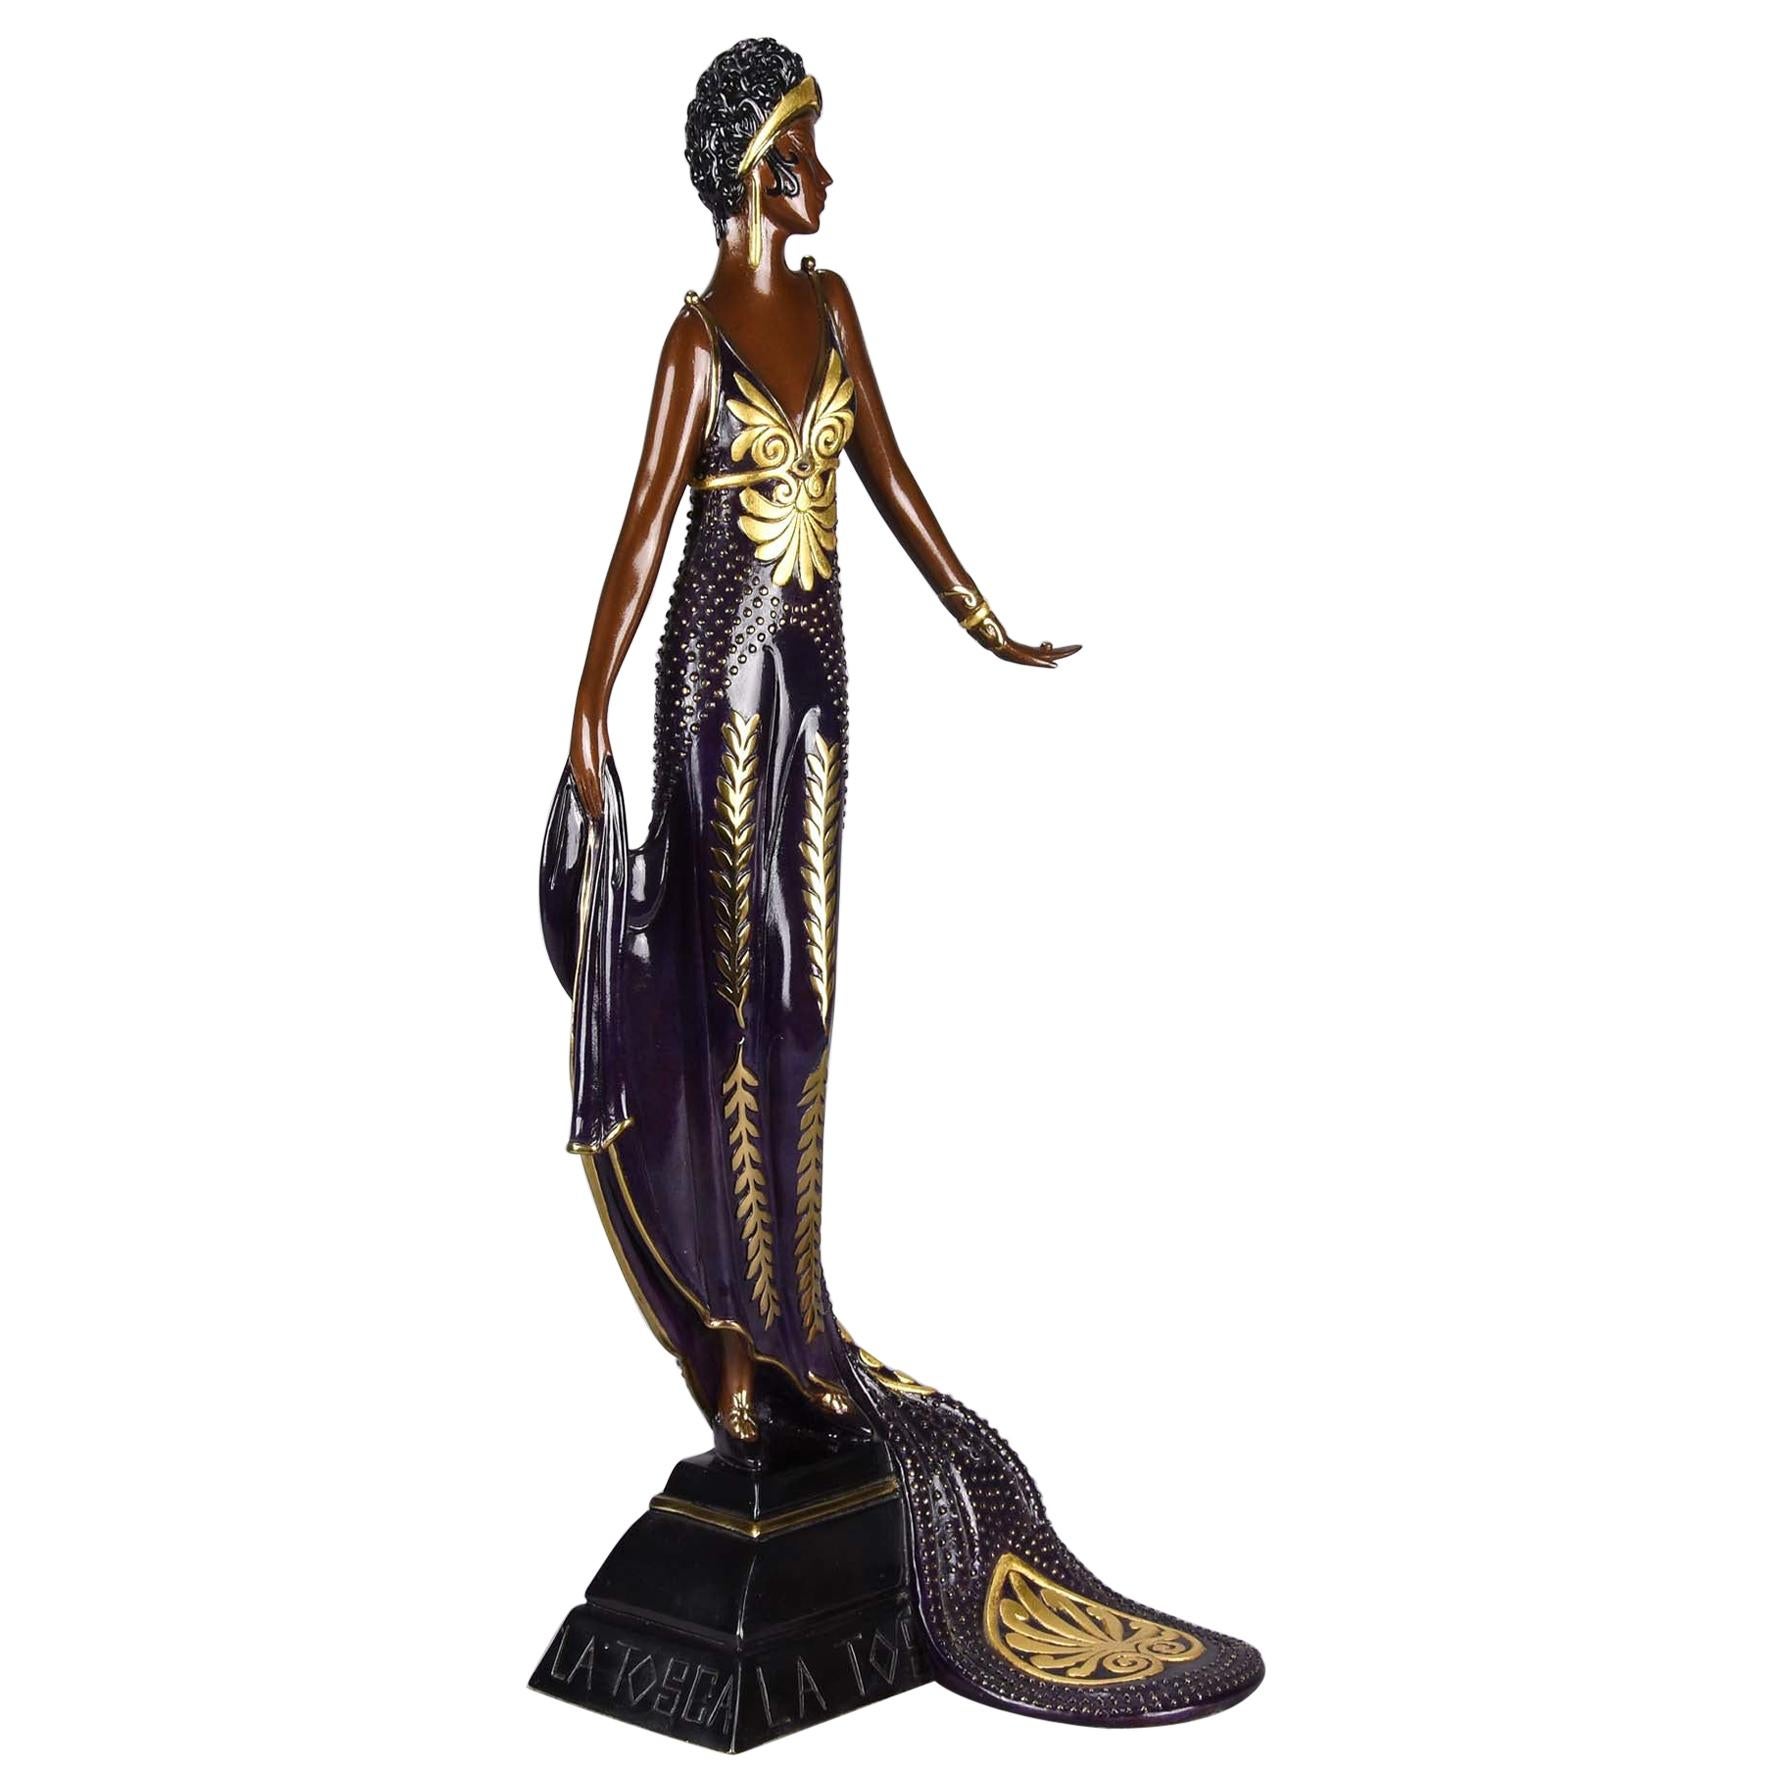 Cold Painted Limited Edition Bronze Figure "La Tosca" by Erté